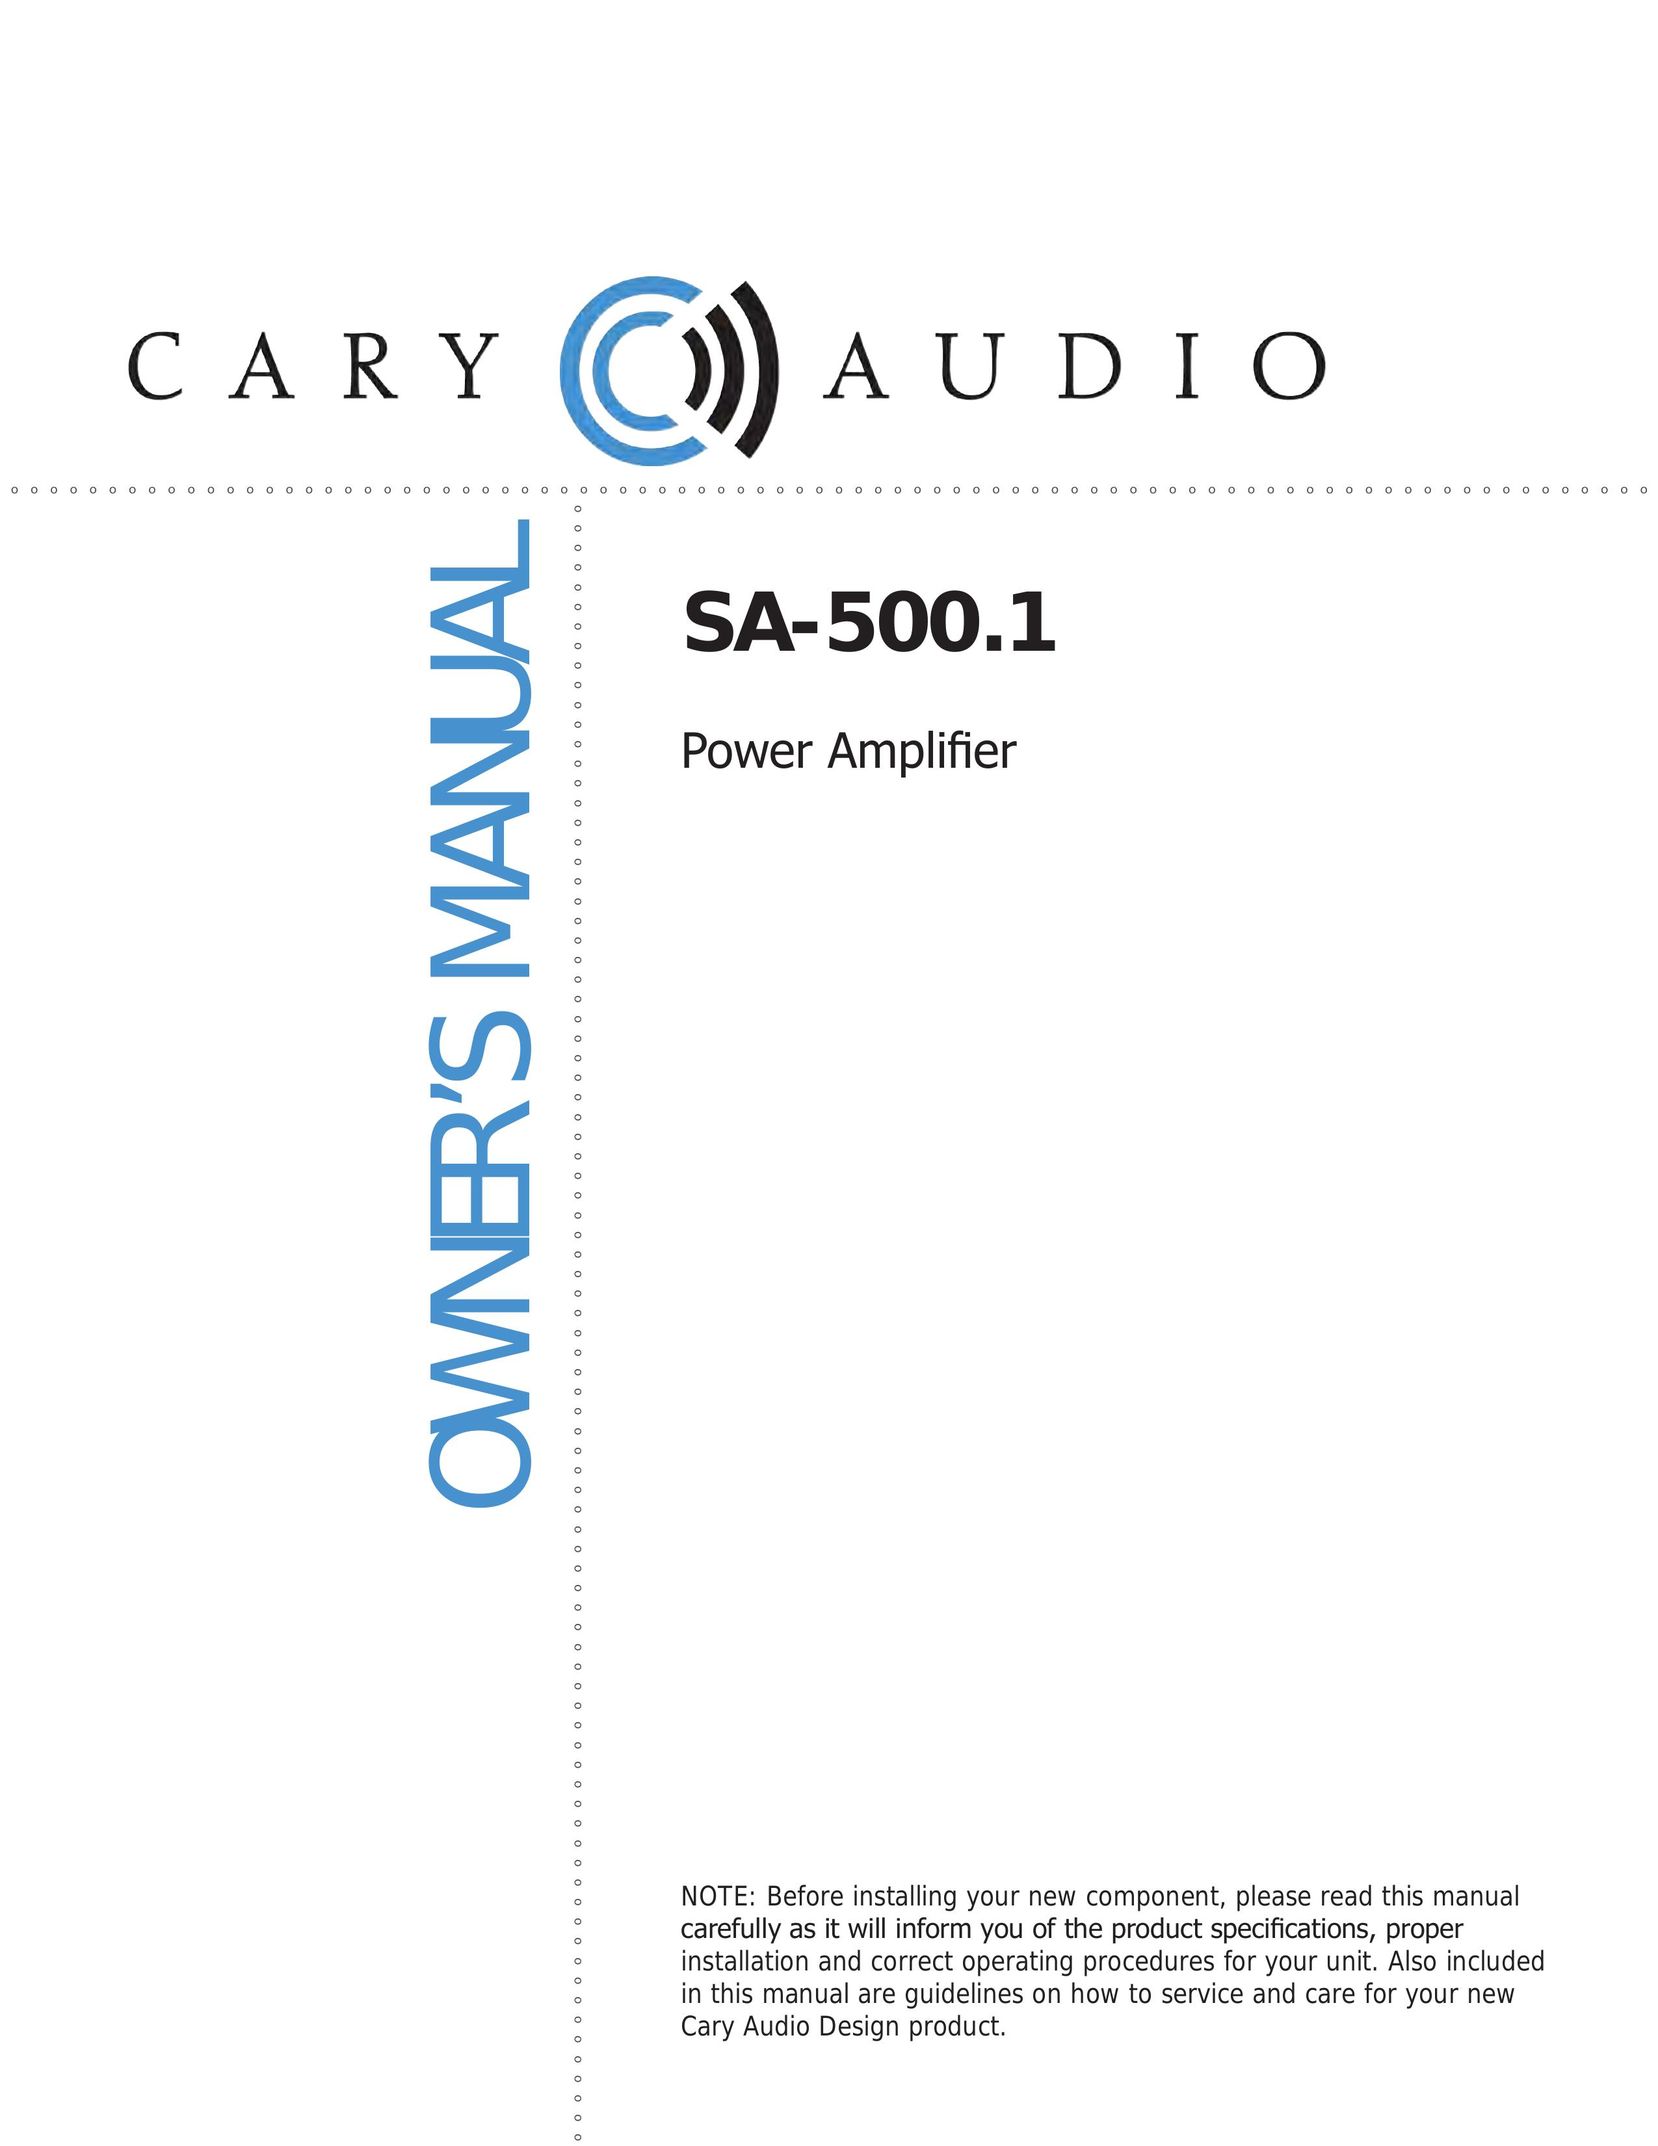 Cary Audio Design SA-500.1 Stereo Amplifier User Manual